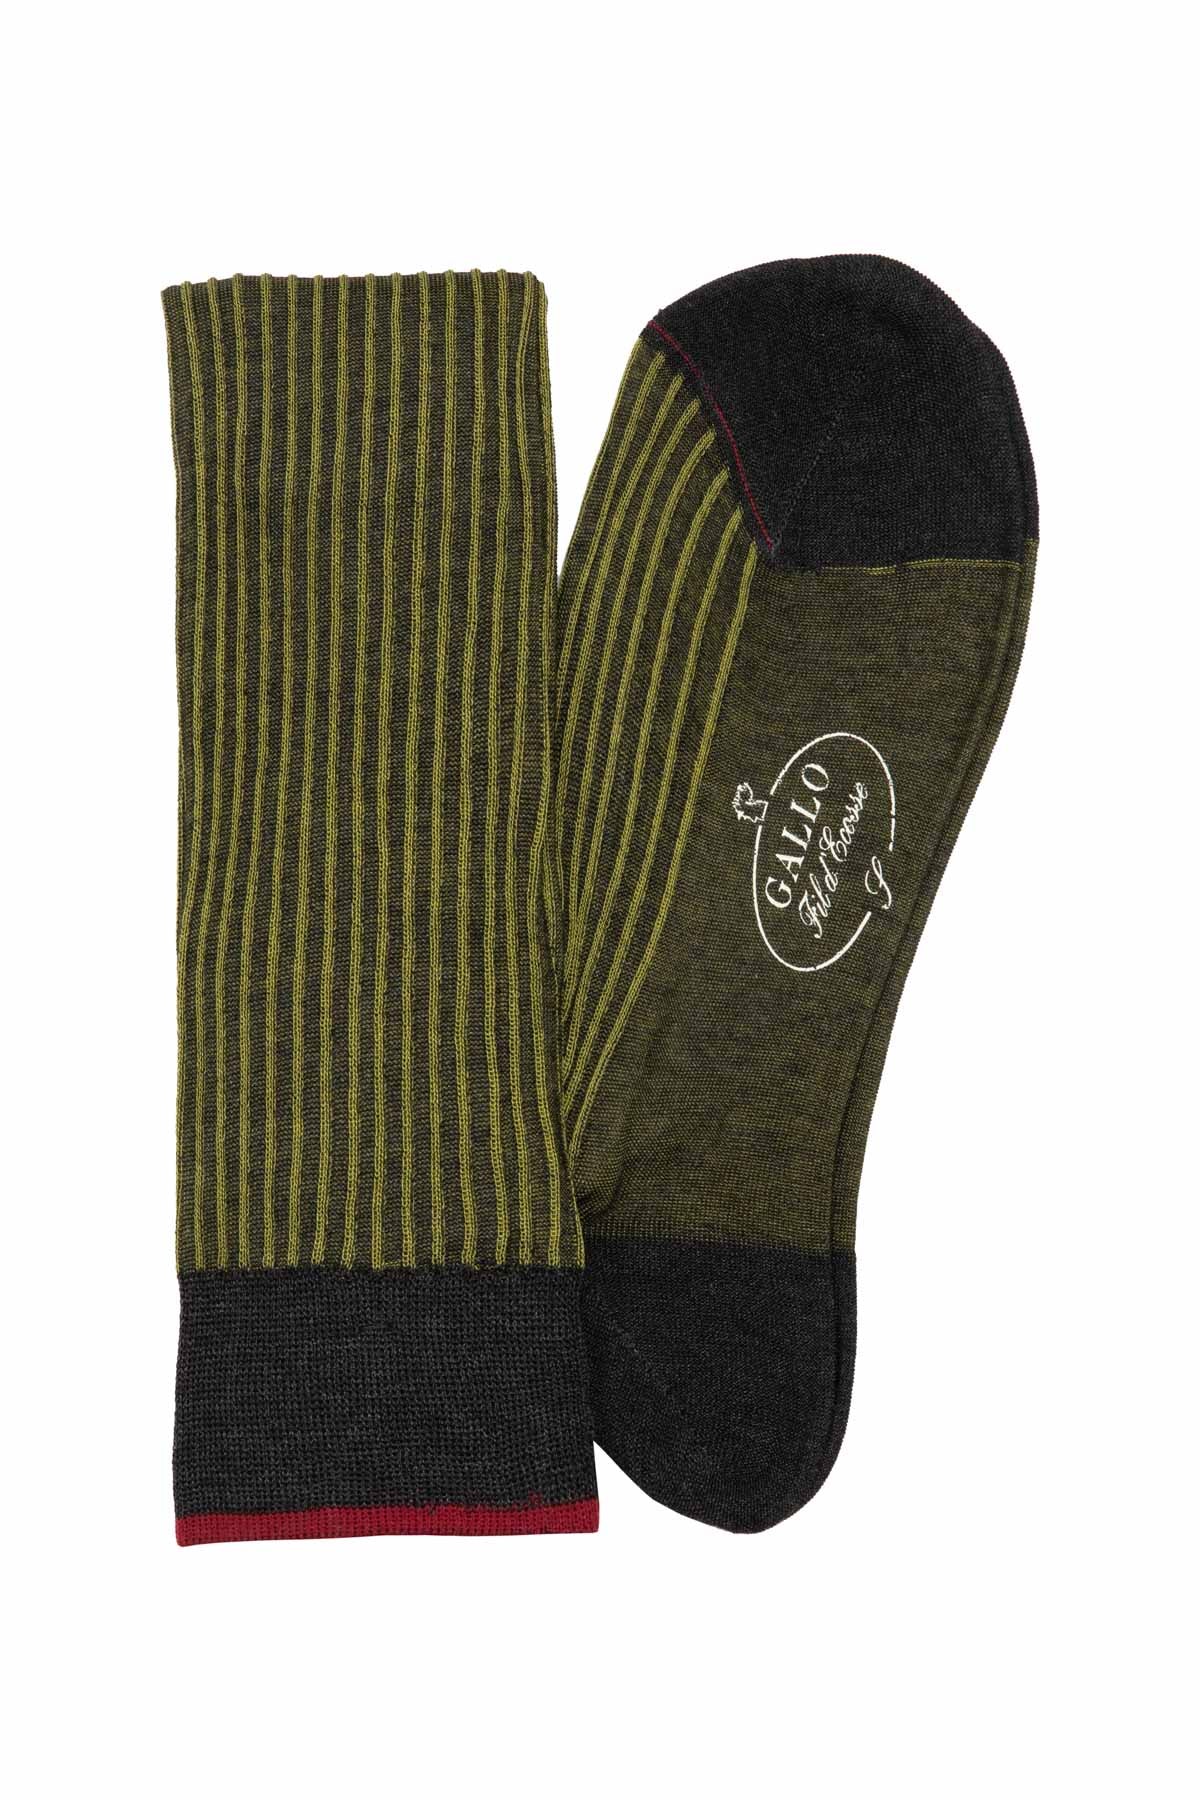 Italian Ribbed Socks - Khaki & Lime